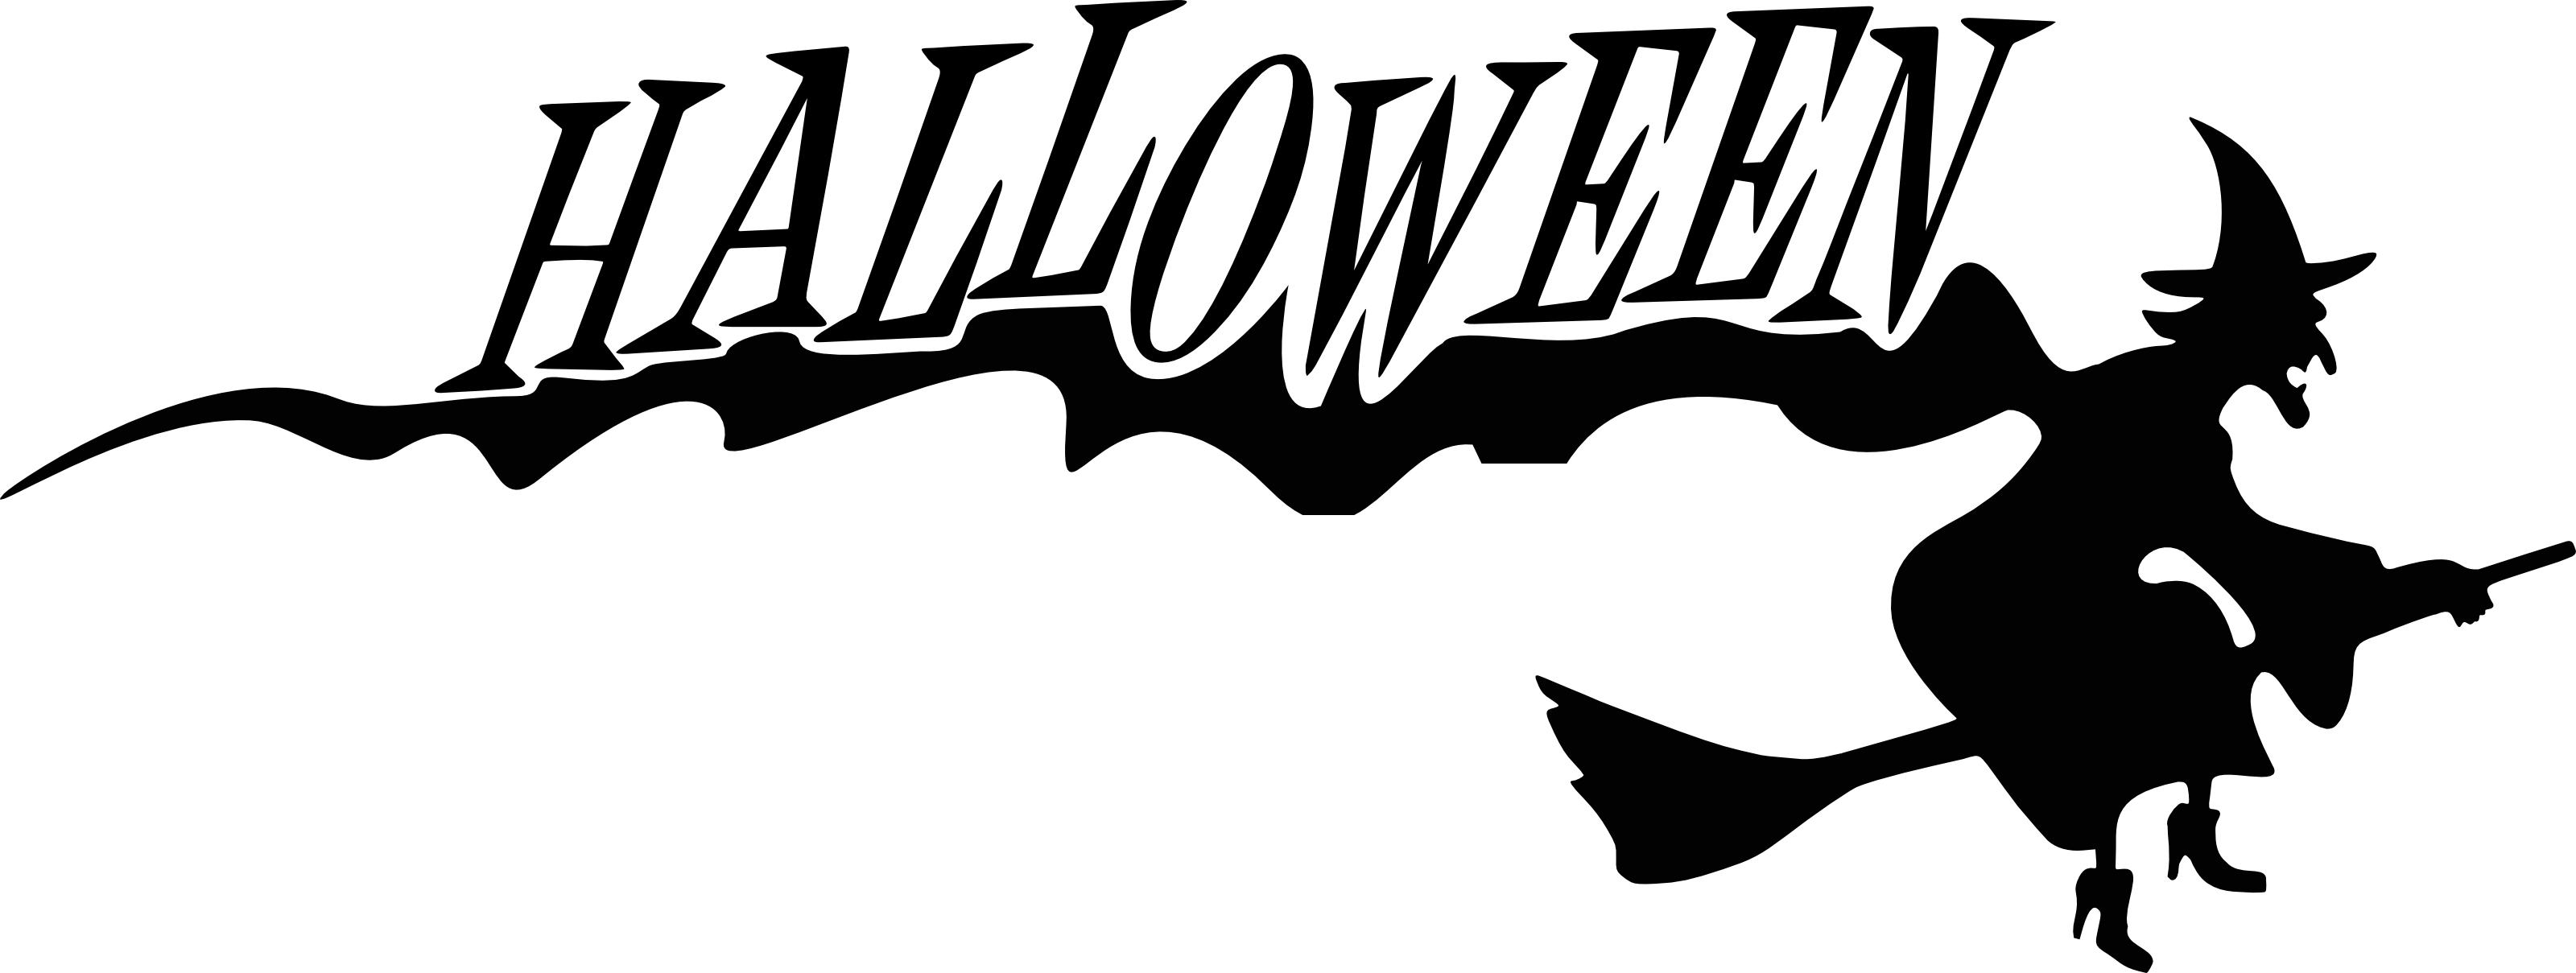 free halloween graphics clip art - photo #44